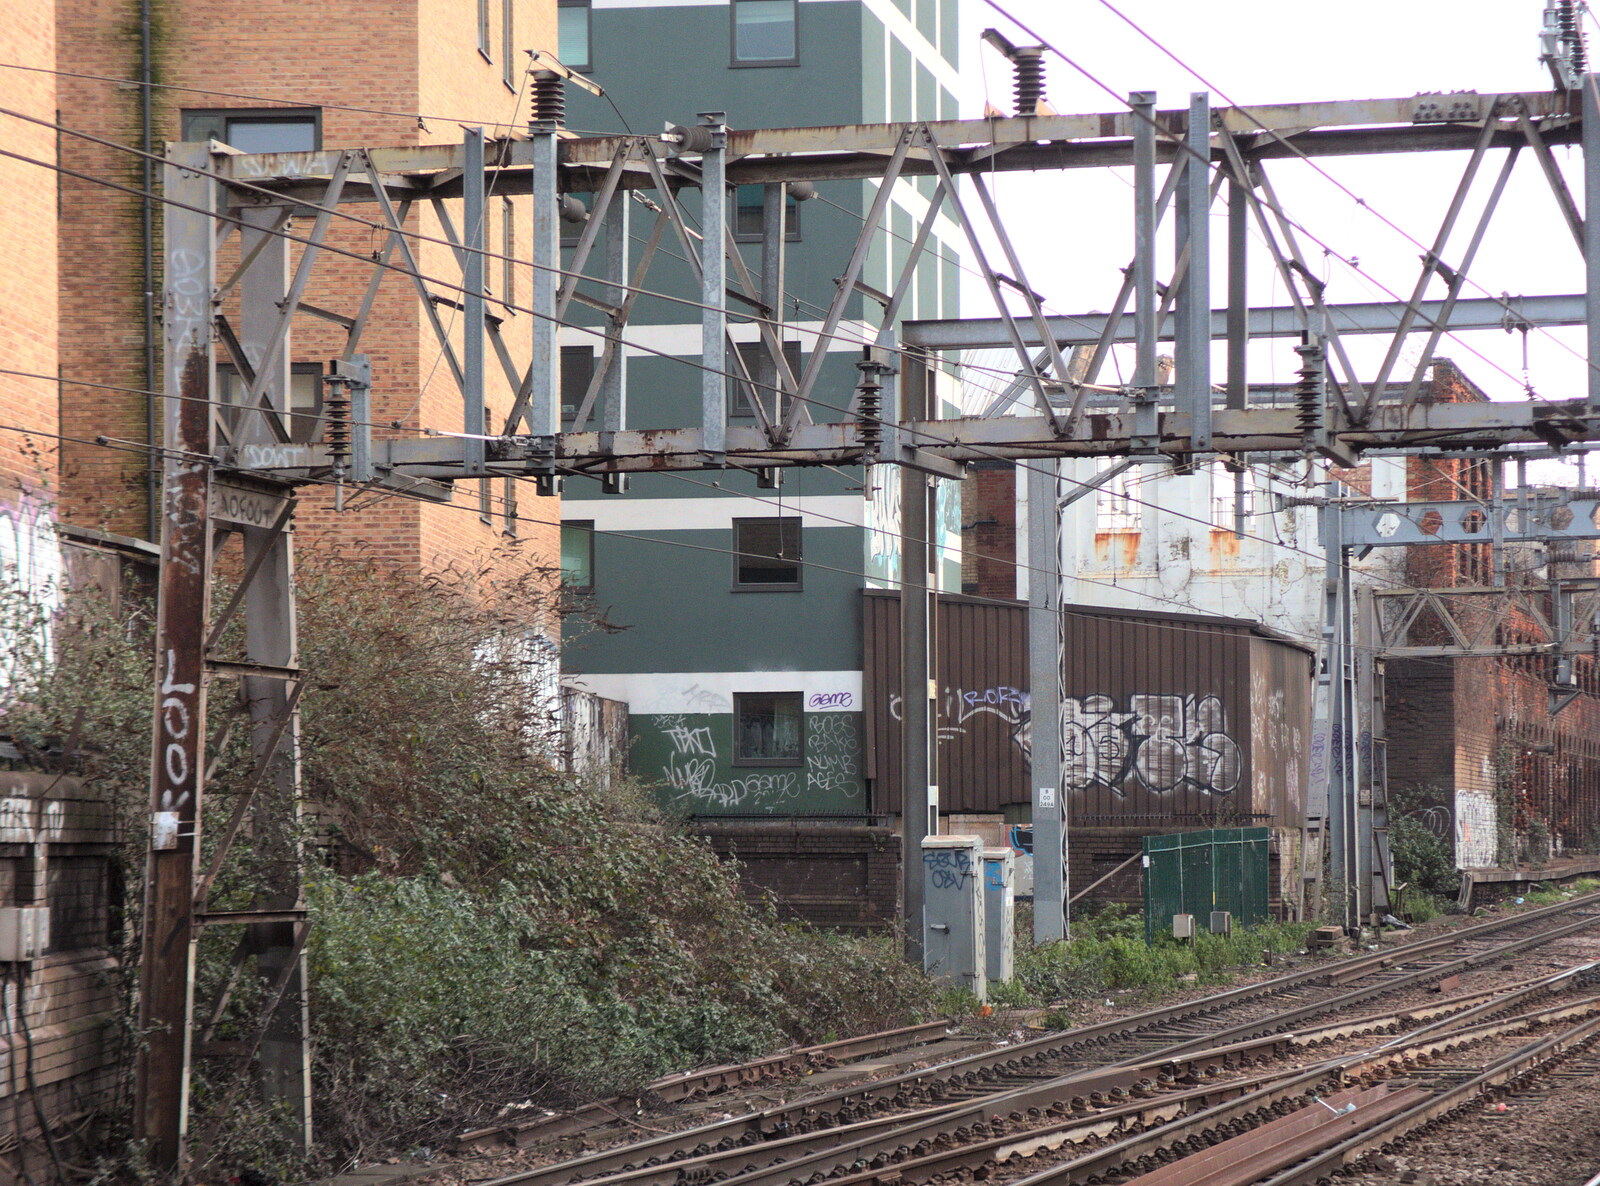 Rusty overhead wiring gantry from Railway Graffiti, Tower Hamlets, London - 12th February 2019